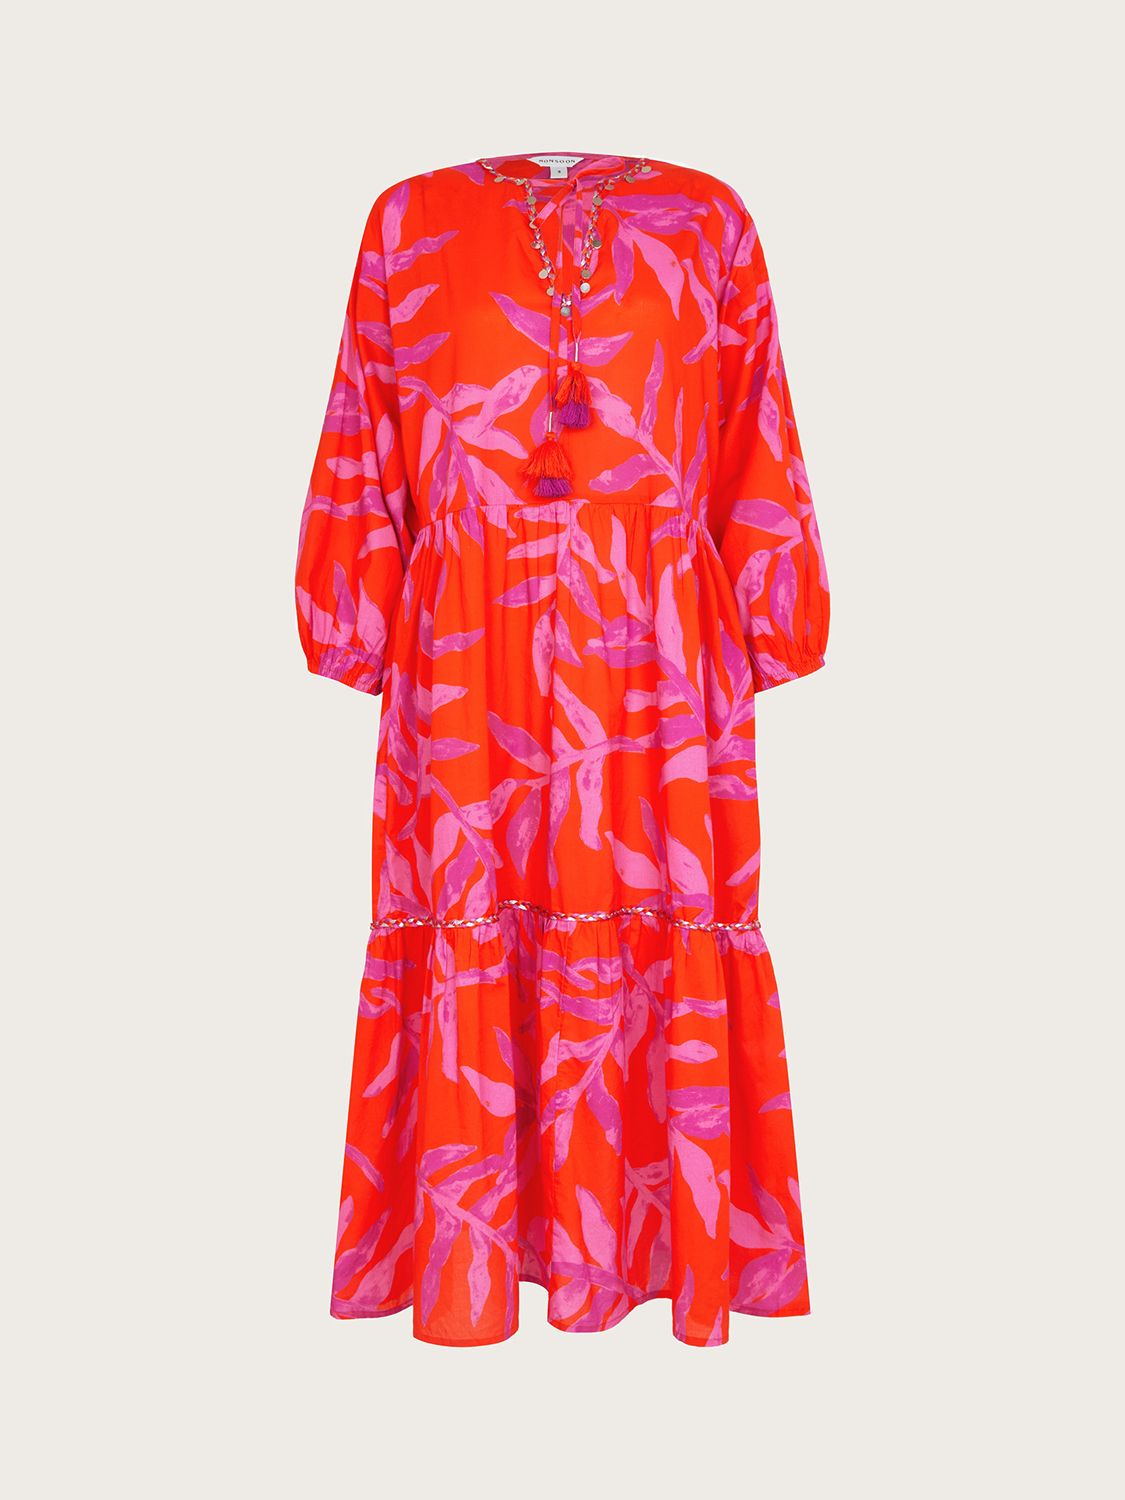 Monsoon Arissa Palm Print Kaftan Dress, Red/Multi, S